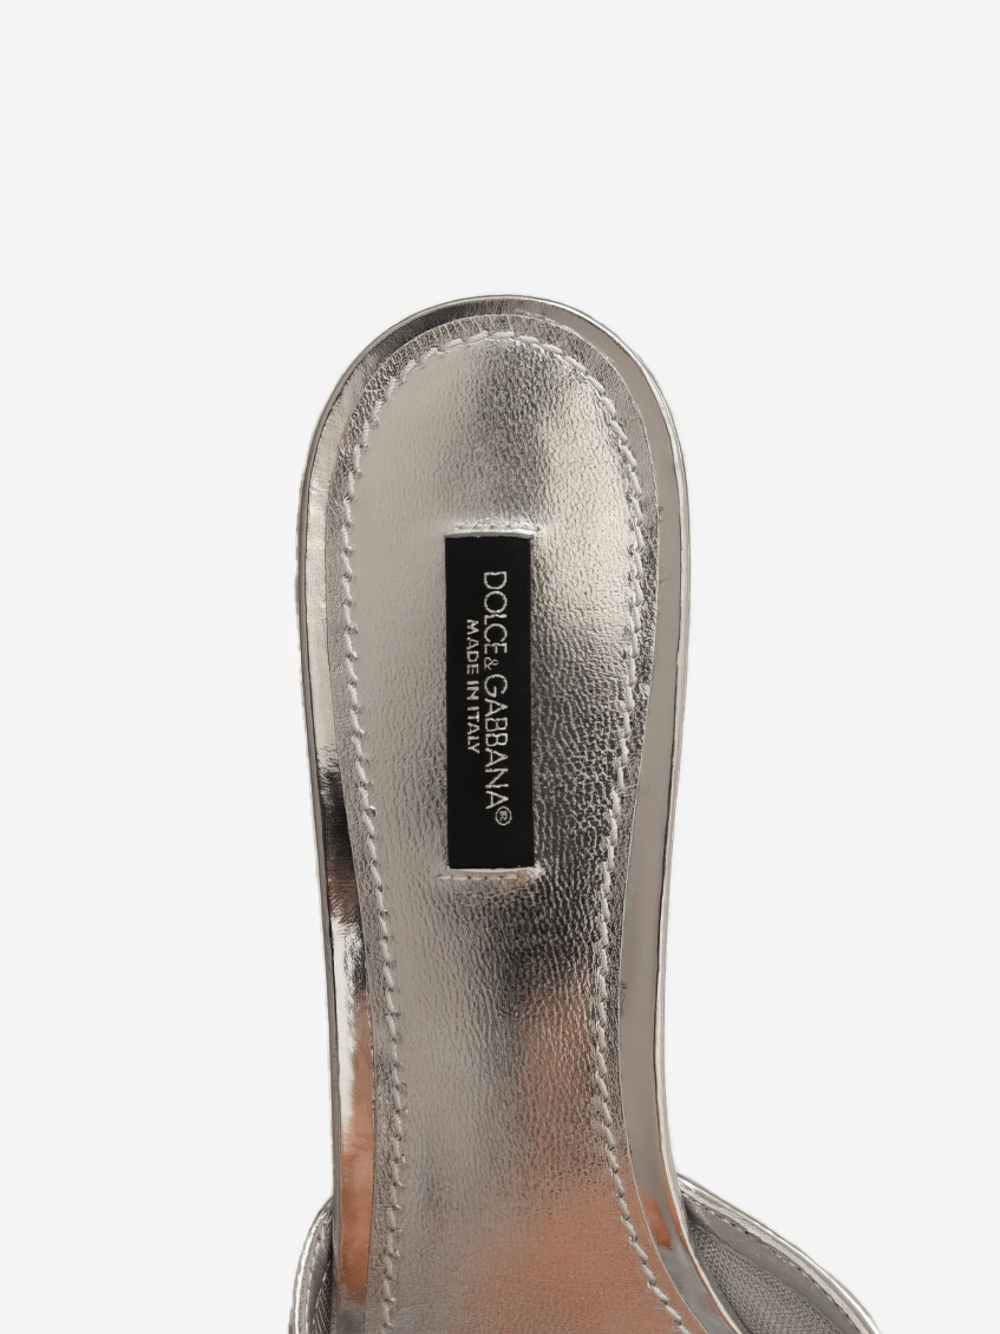 Dolce & Gabbana Keira Floral Appliqué Sandals